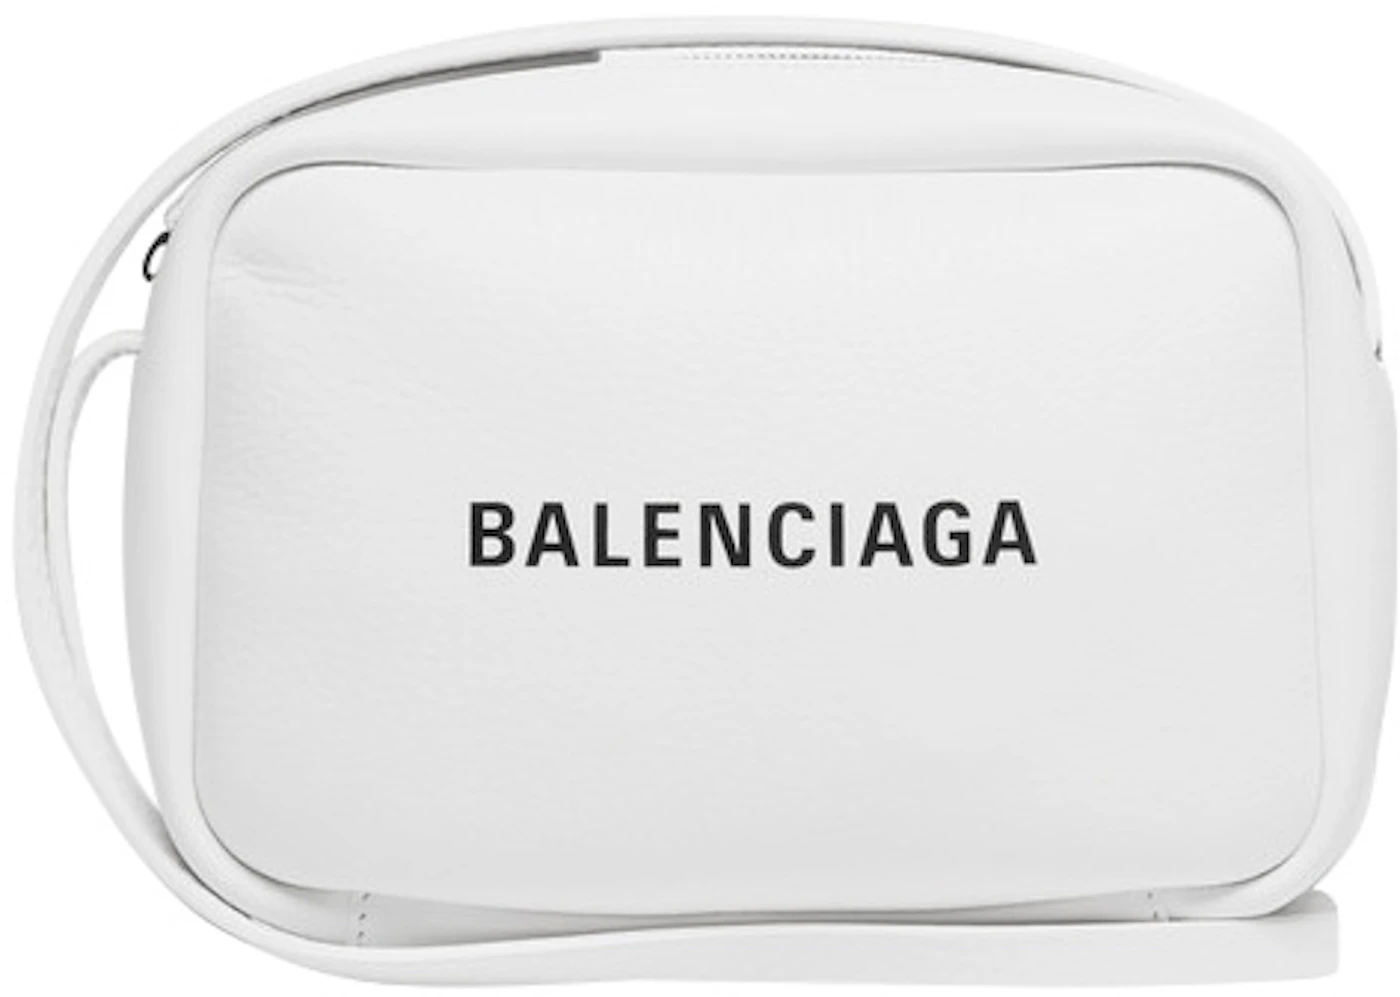 Balenciaga Black & White Logo Everyday Camera Bag